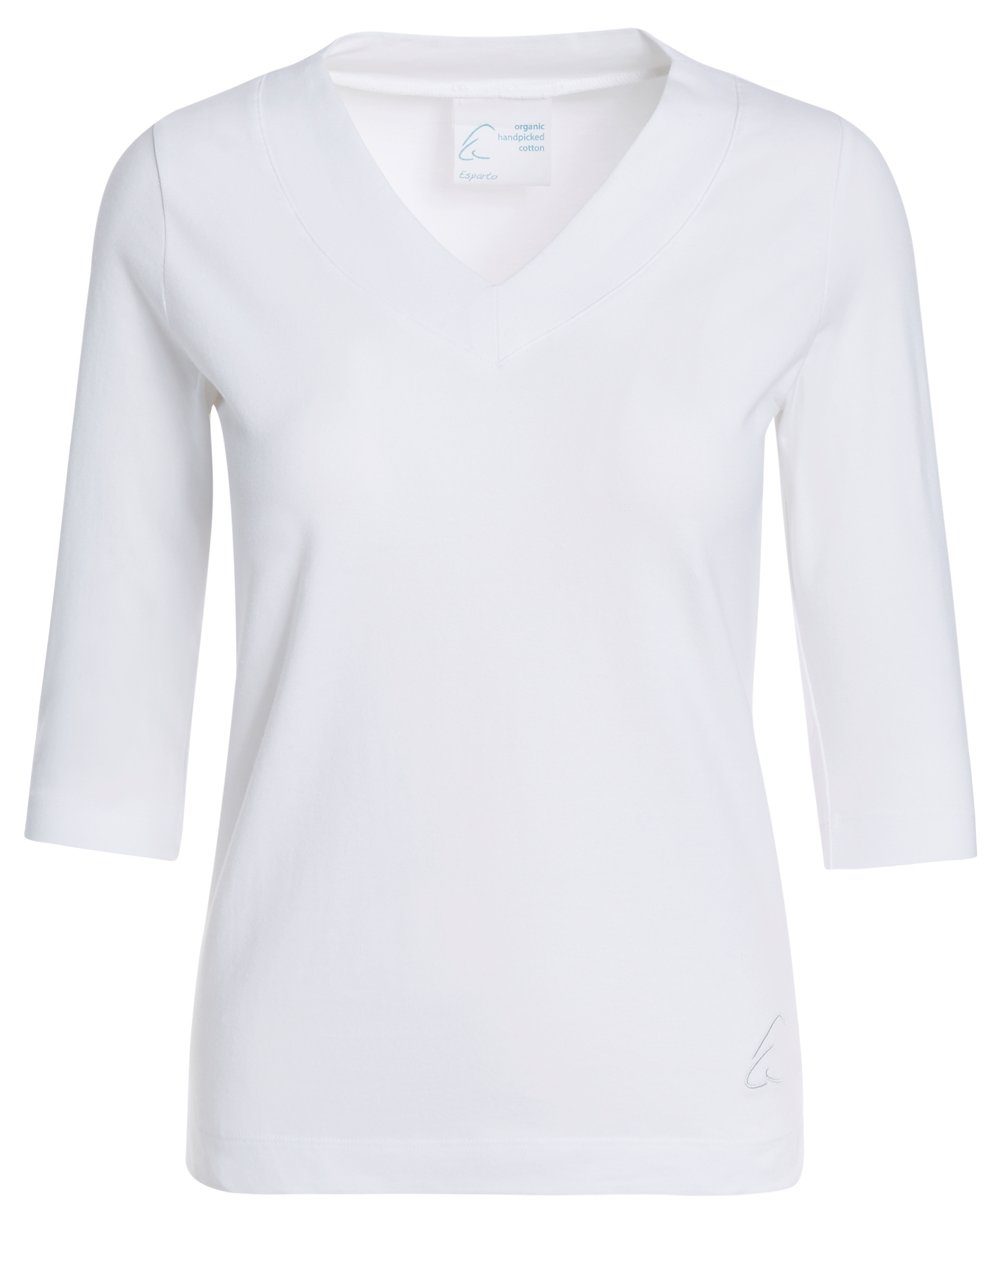 2/3 und Damen-Shirt Schneeweiß Yogatop lang leicht Sundar geschlitzt, ESPARTO geschnitten Bio-Baumwolle in Ärmel, V-Ausschnitt